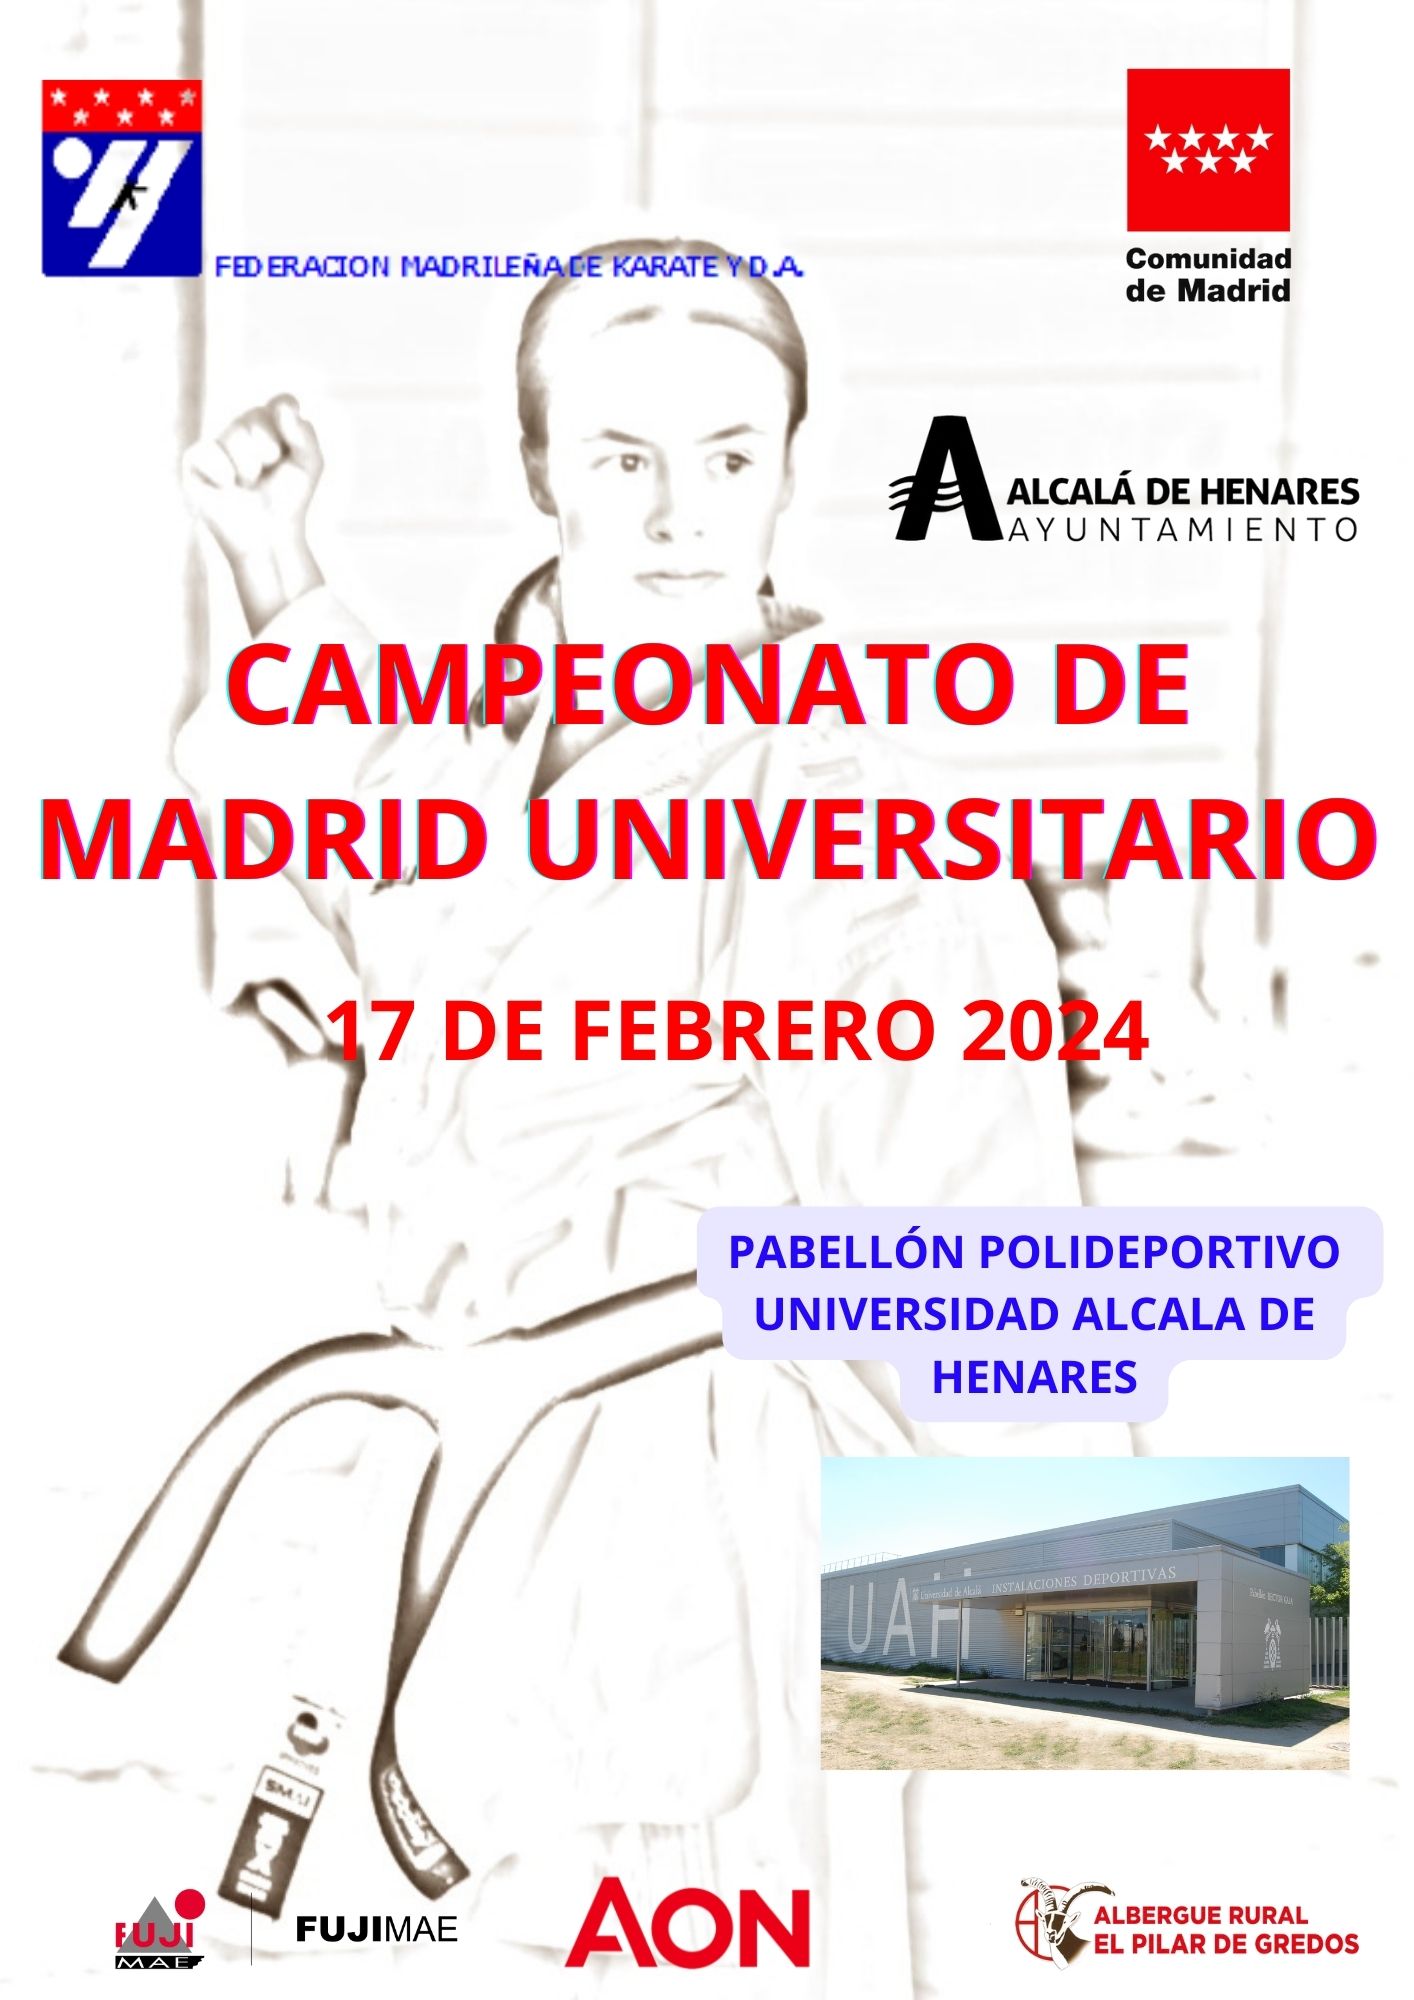 FMK · Campeonato de Madrid Universitario 2024